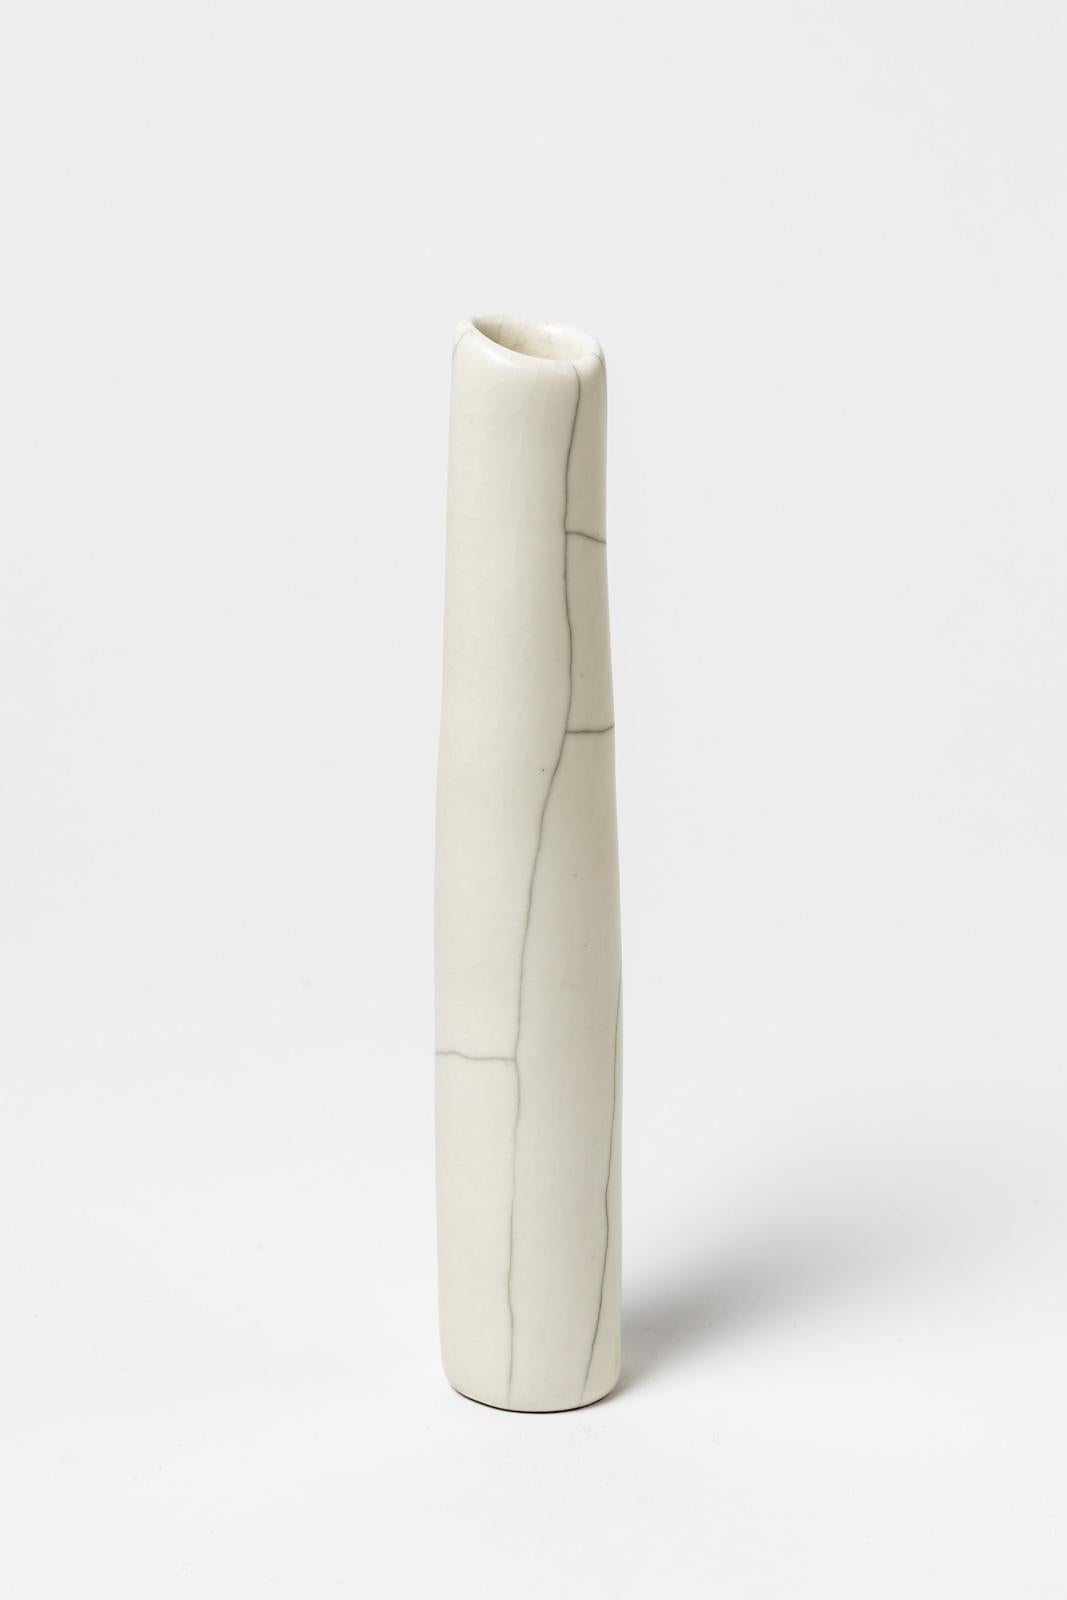 Marc Uzan

Elegant white and black ceramic vase or sculpture.

Original porcelain freeform signed under the base UZAN

Realised, circa 2000

Original perfect condition

Measures: Height 18.5cm, large 3cm.